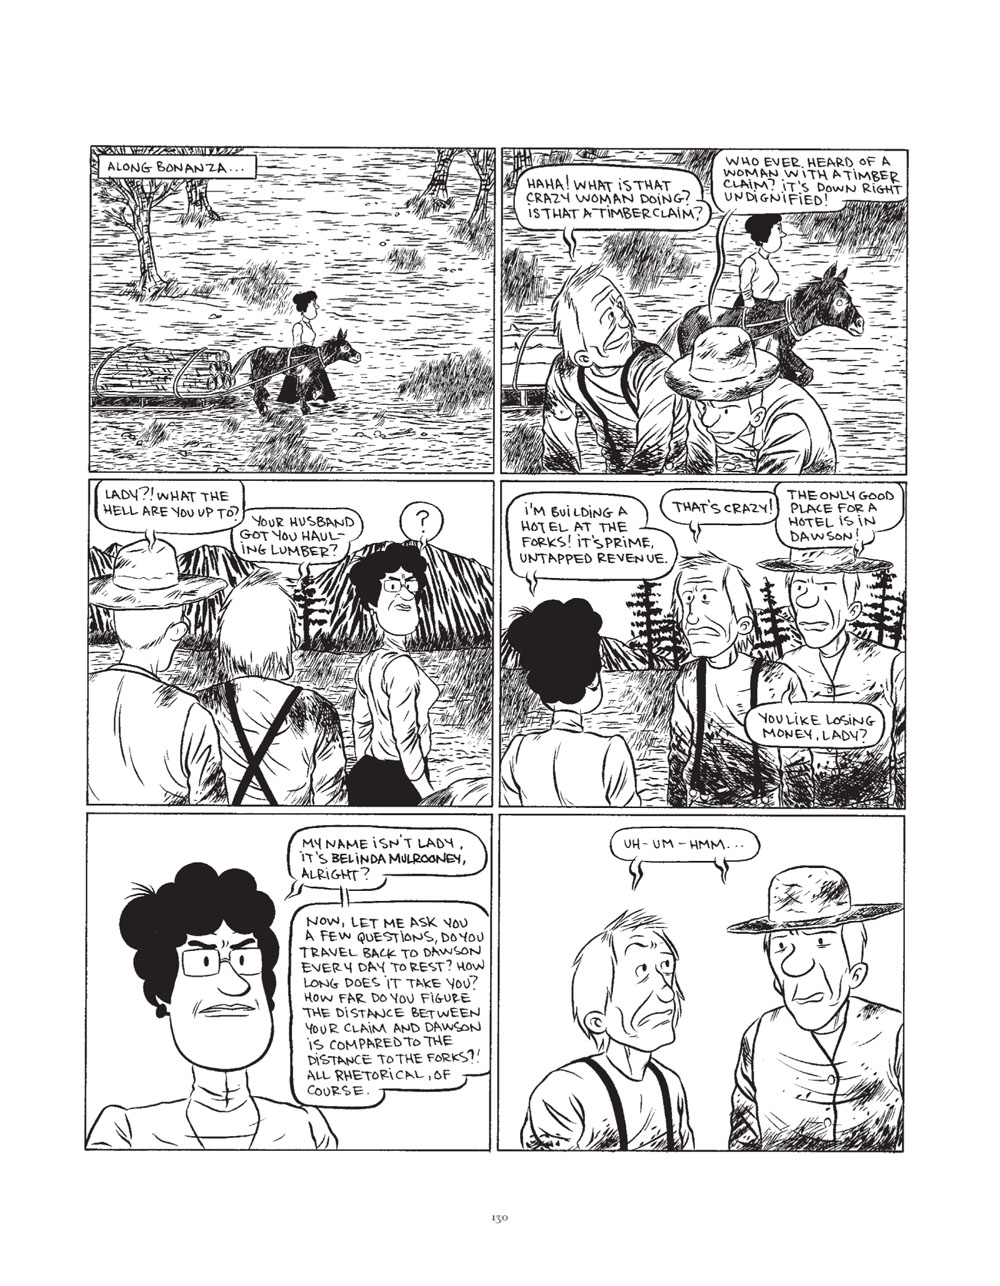 The Klondike Page 130